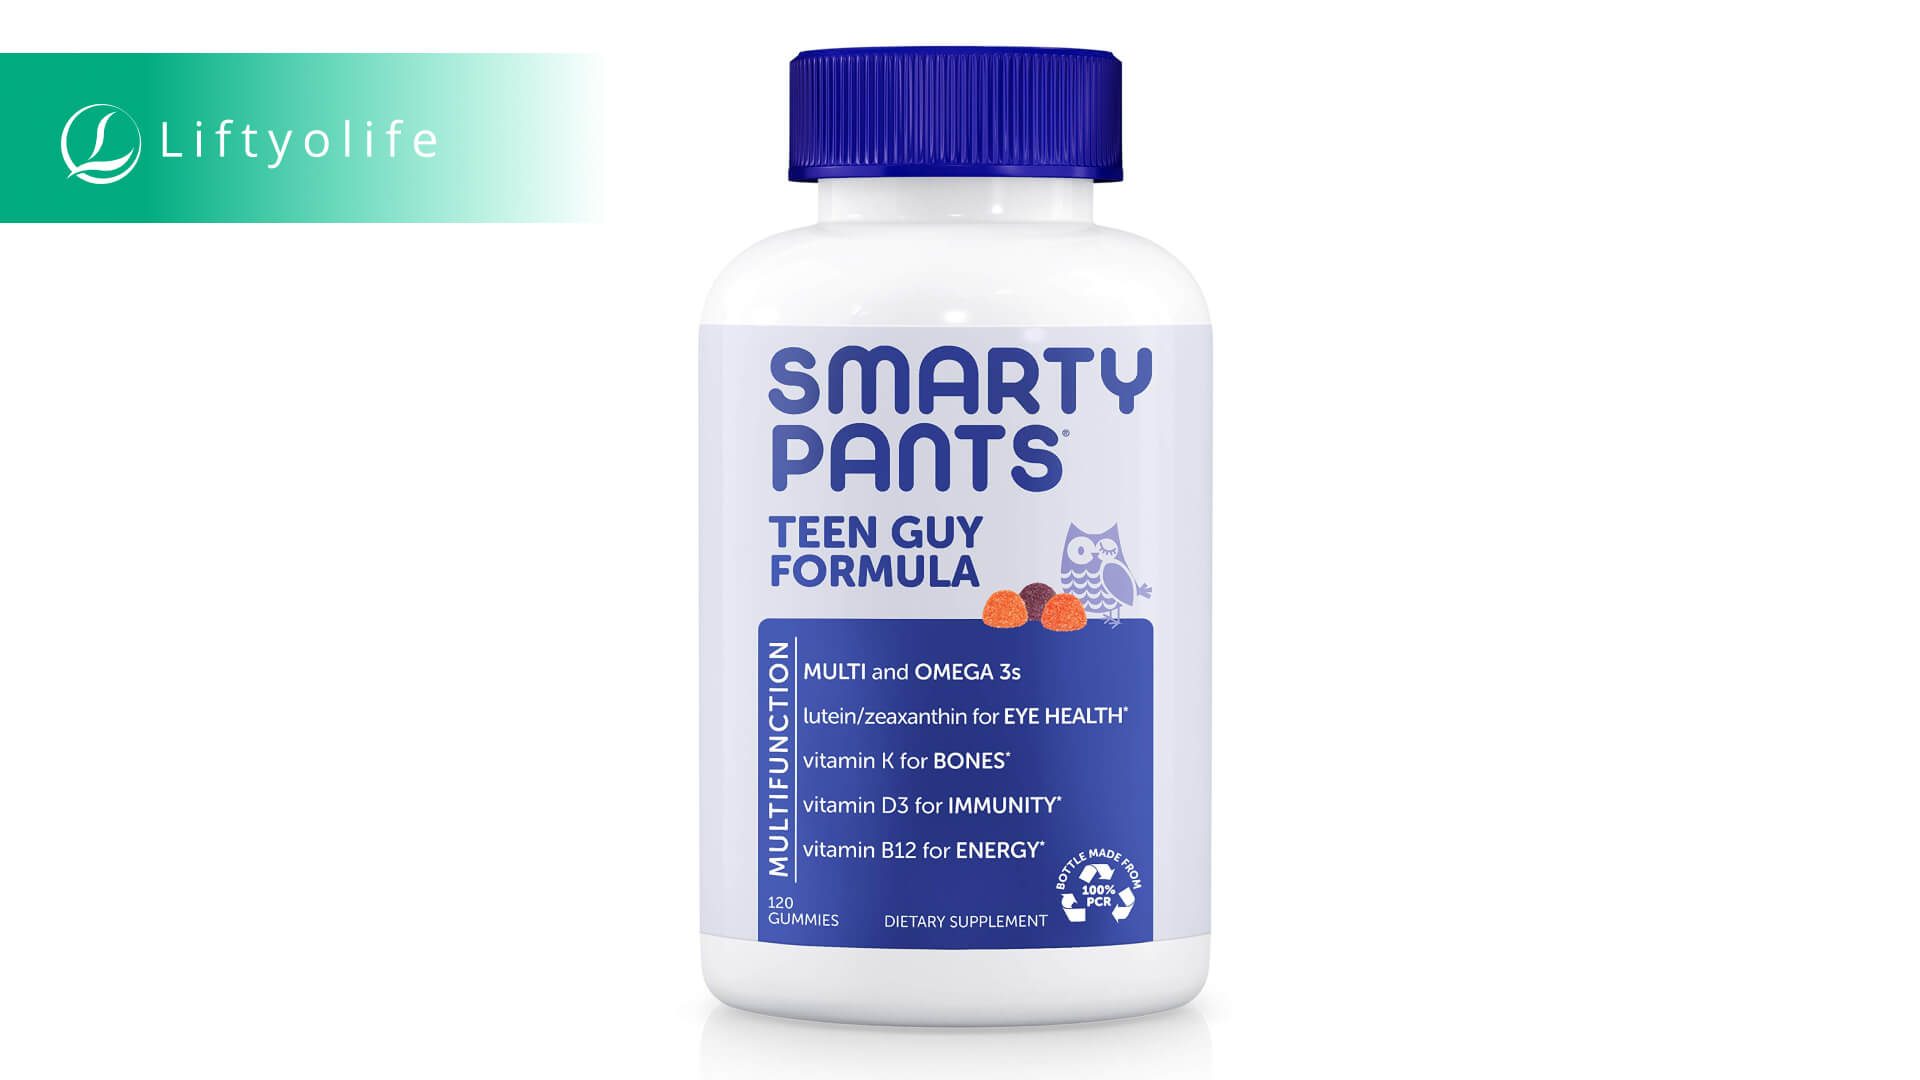 SmartyPants men’s formula daily gummy multivitamin